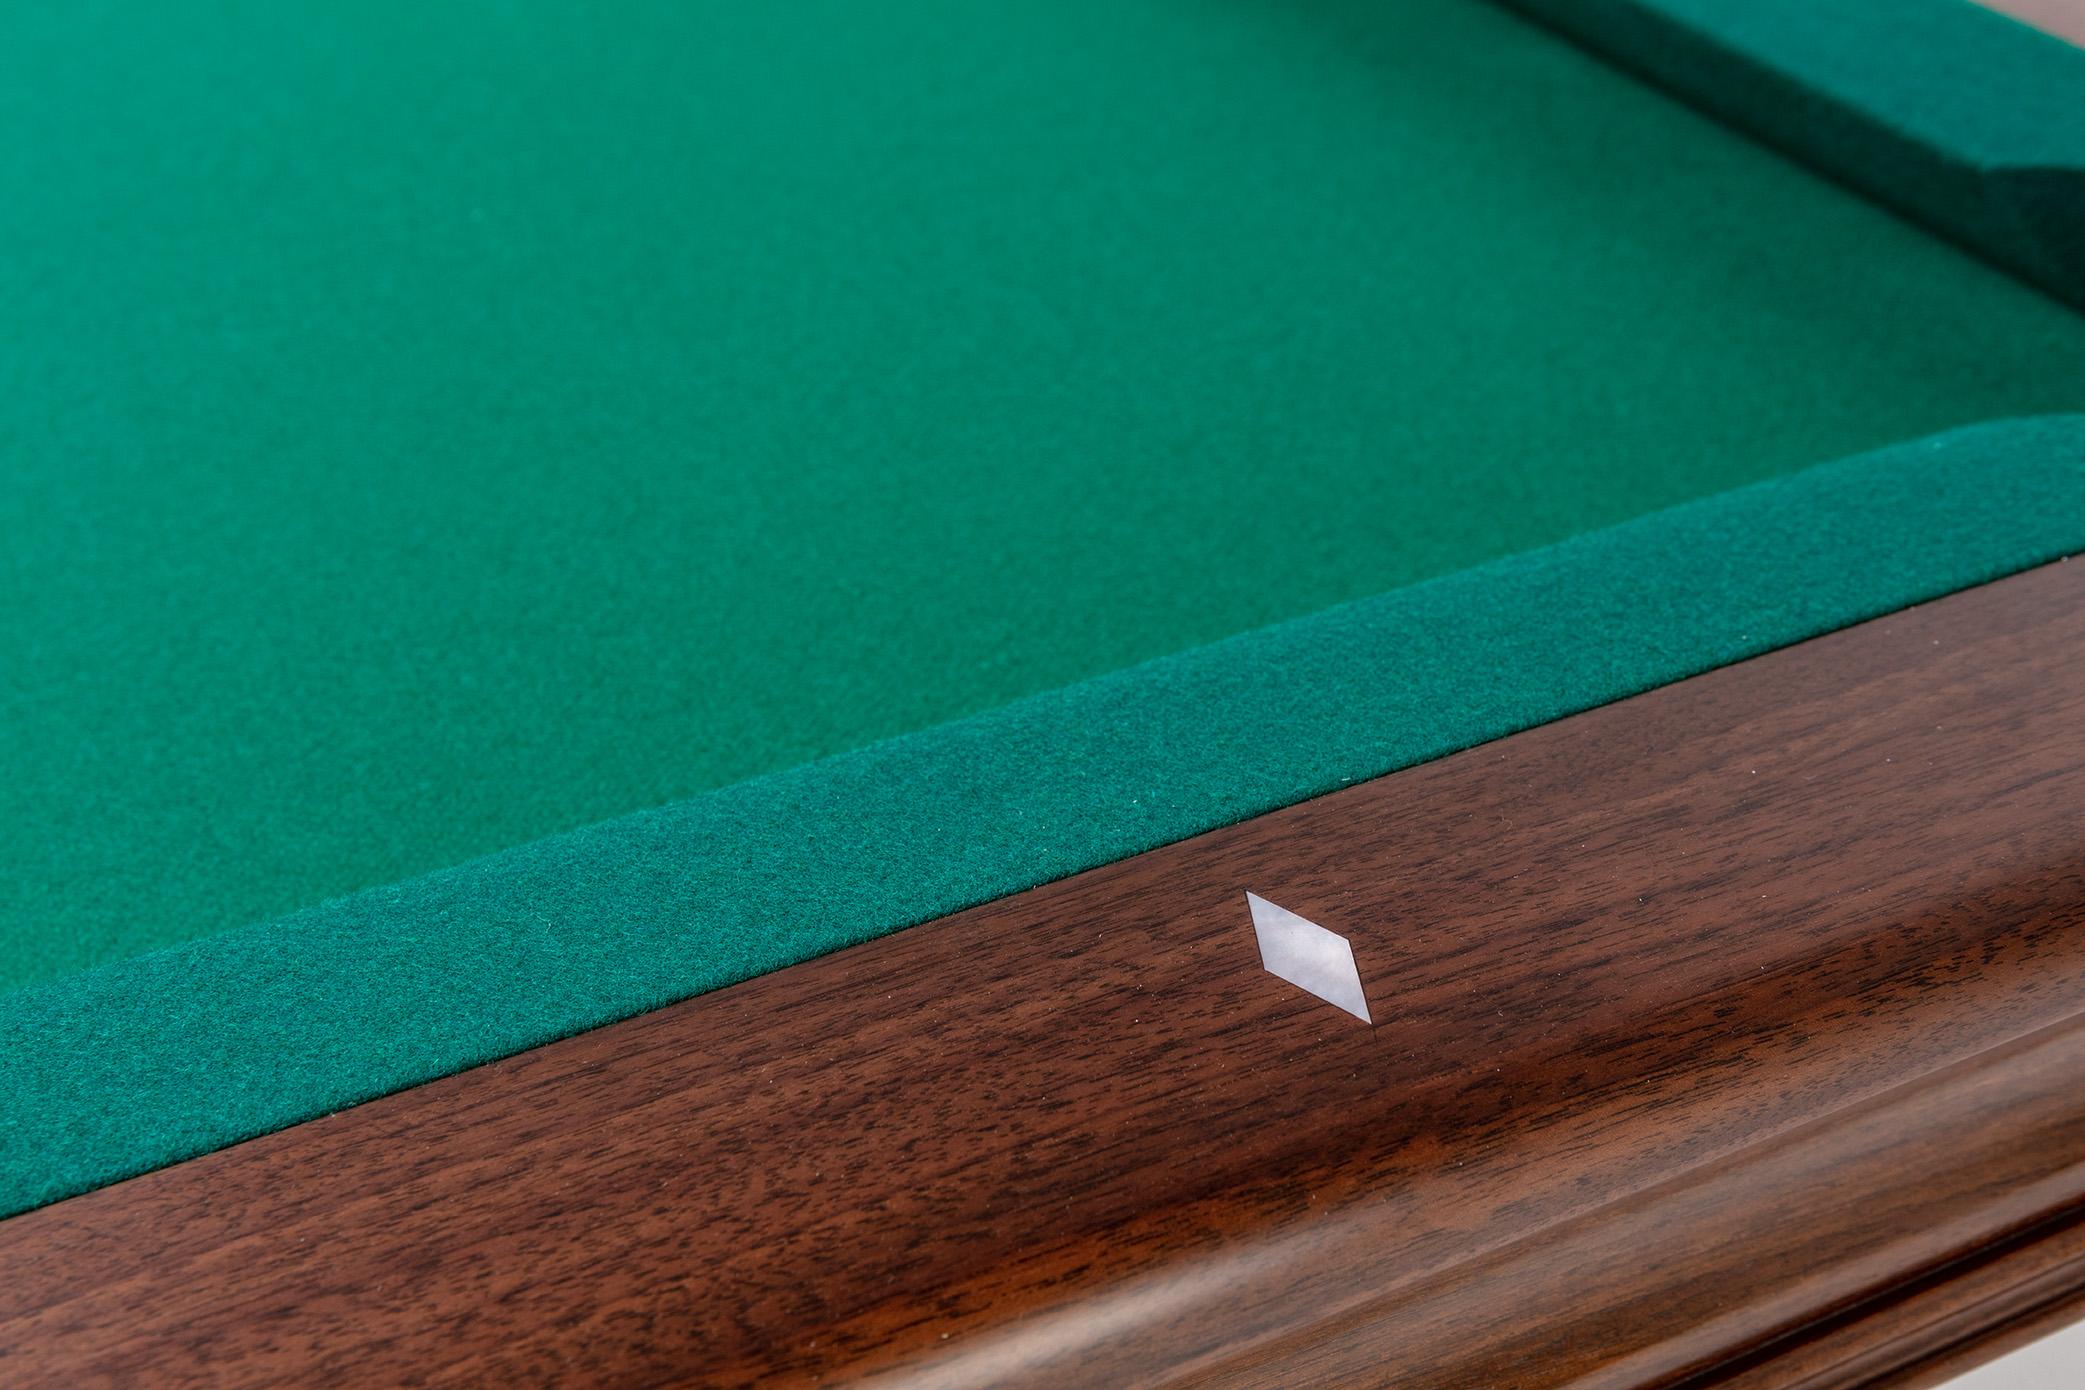 Woodwork Handcrafted Mahogany Wood Blatt Billiards Raleigh Pool Table For Sale